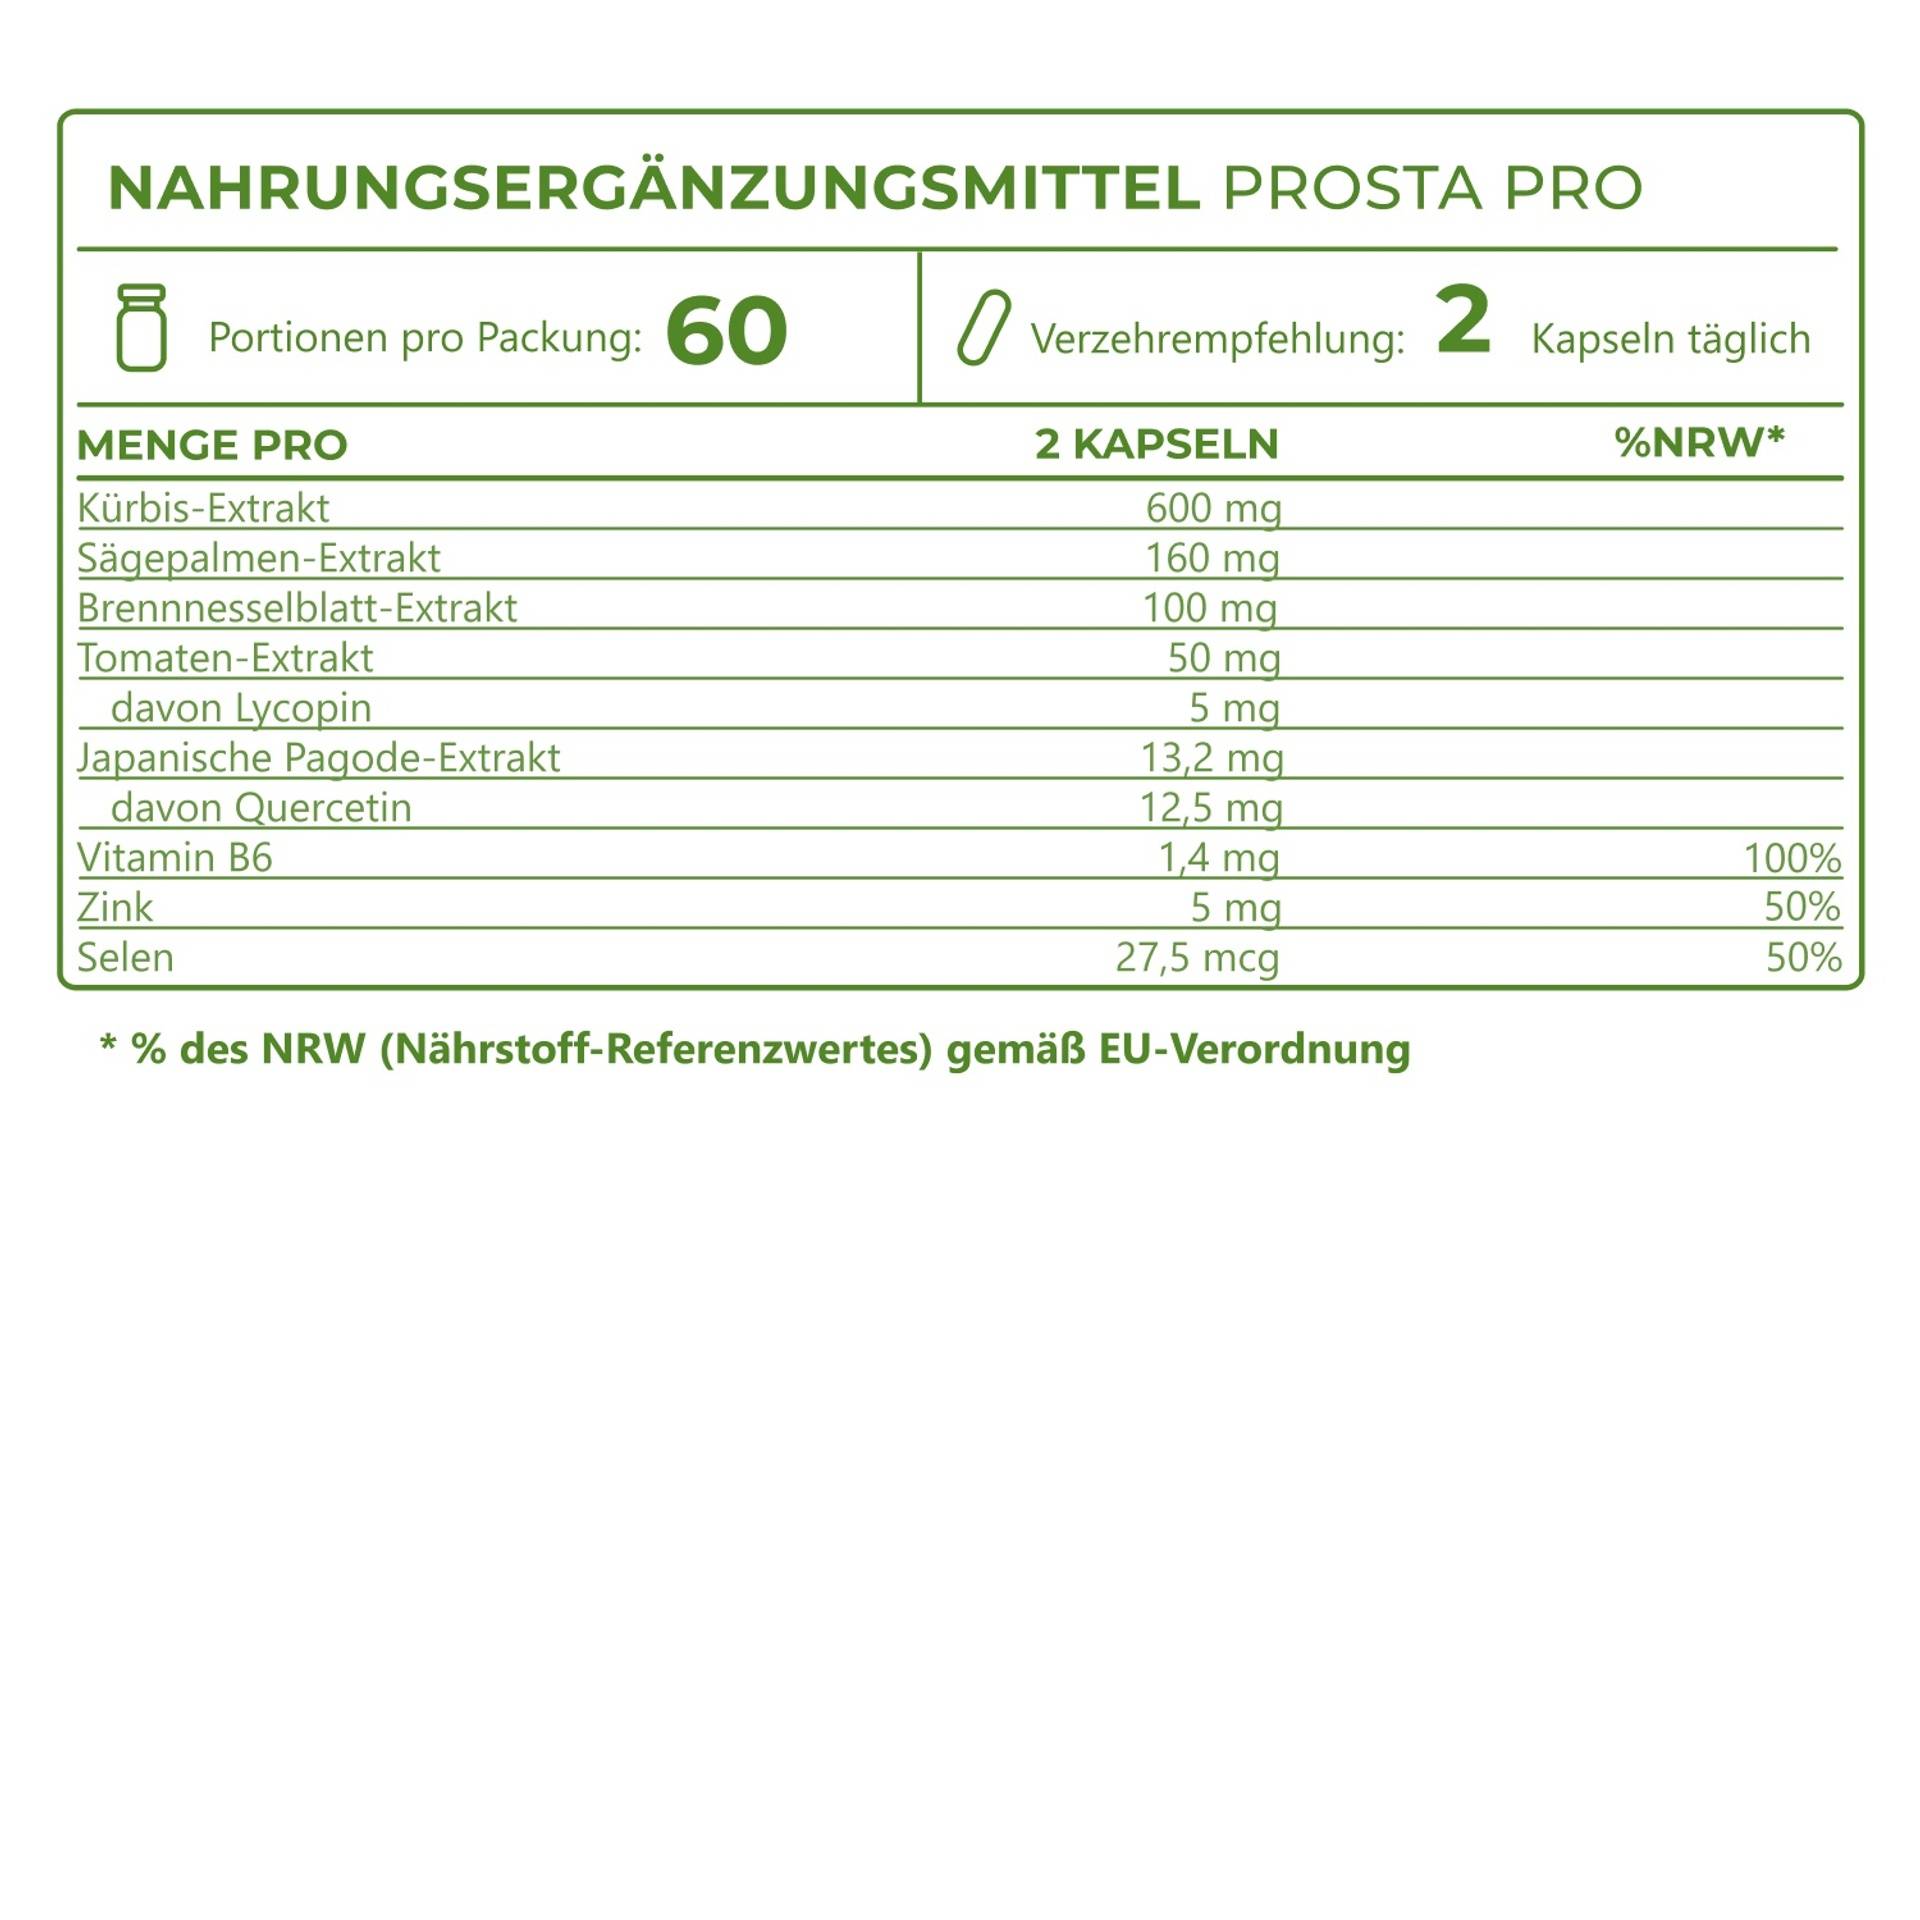 5_Ingredients_Prosta Pro_4777_DE.png